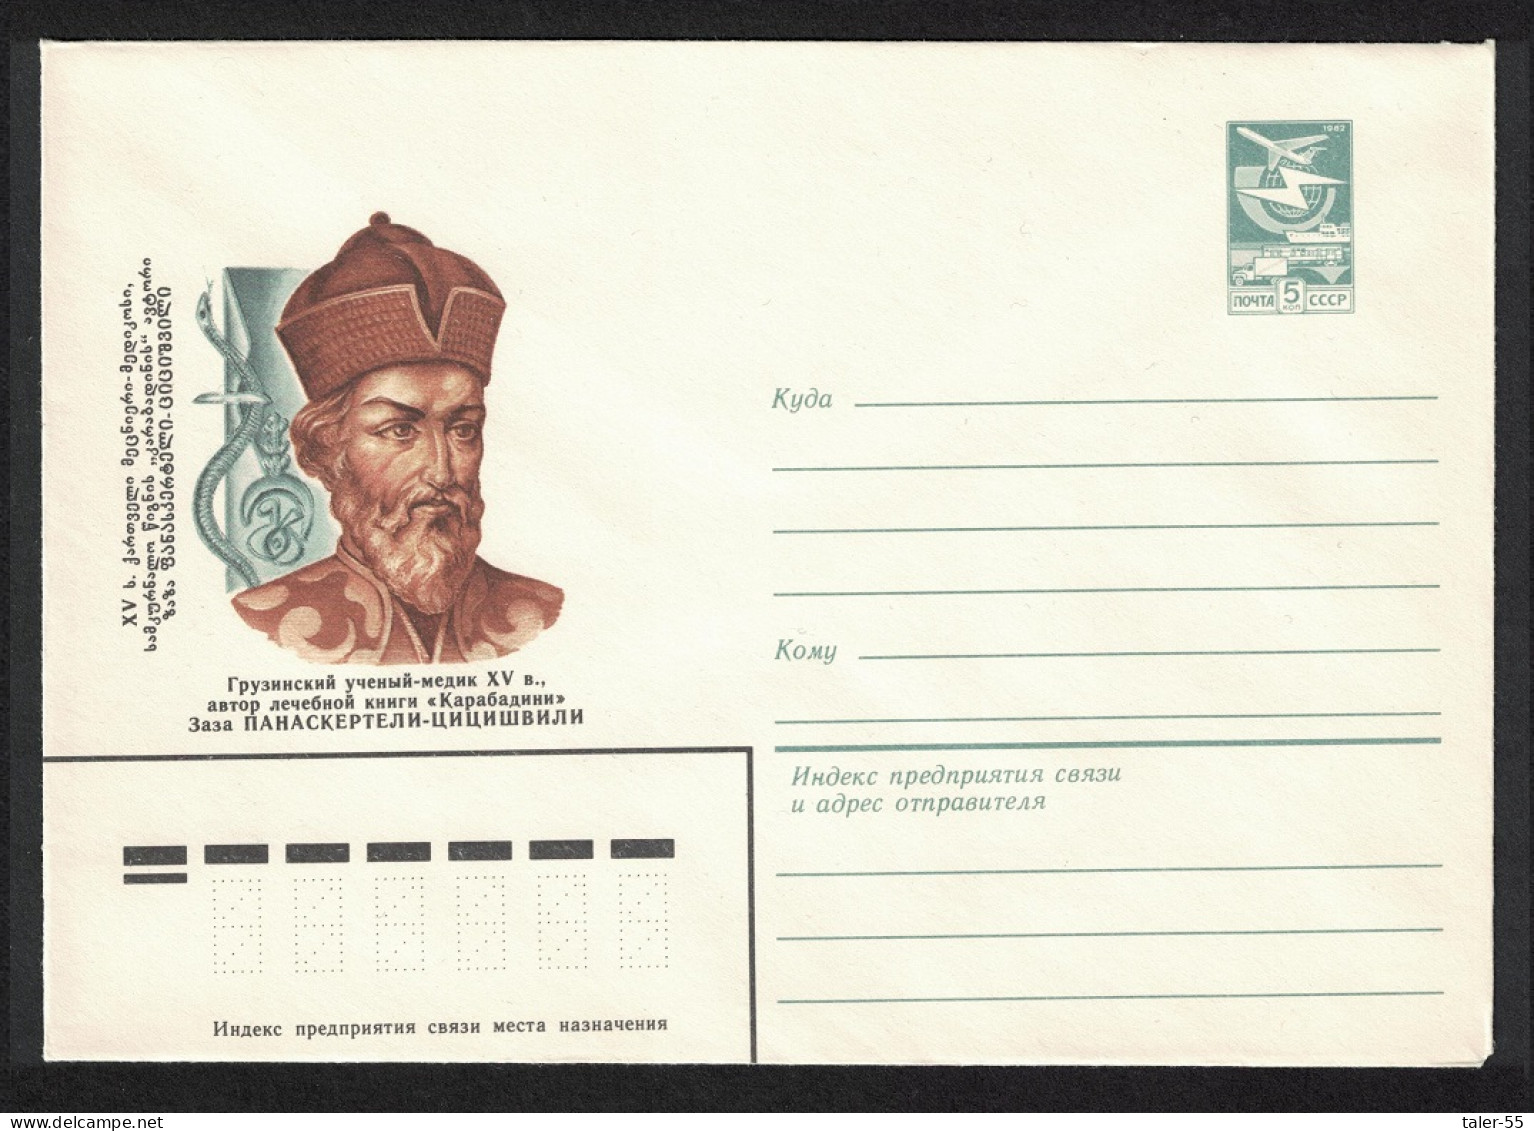 USSR Zaza Panaskerteli Great Georgian Healer Pre-paid Envelope 1980 - Oblitérés